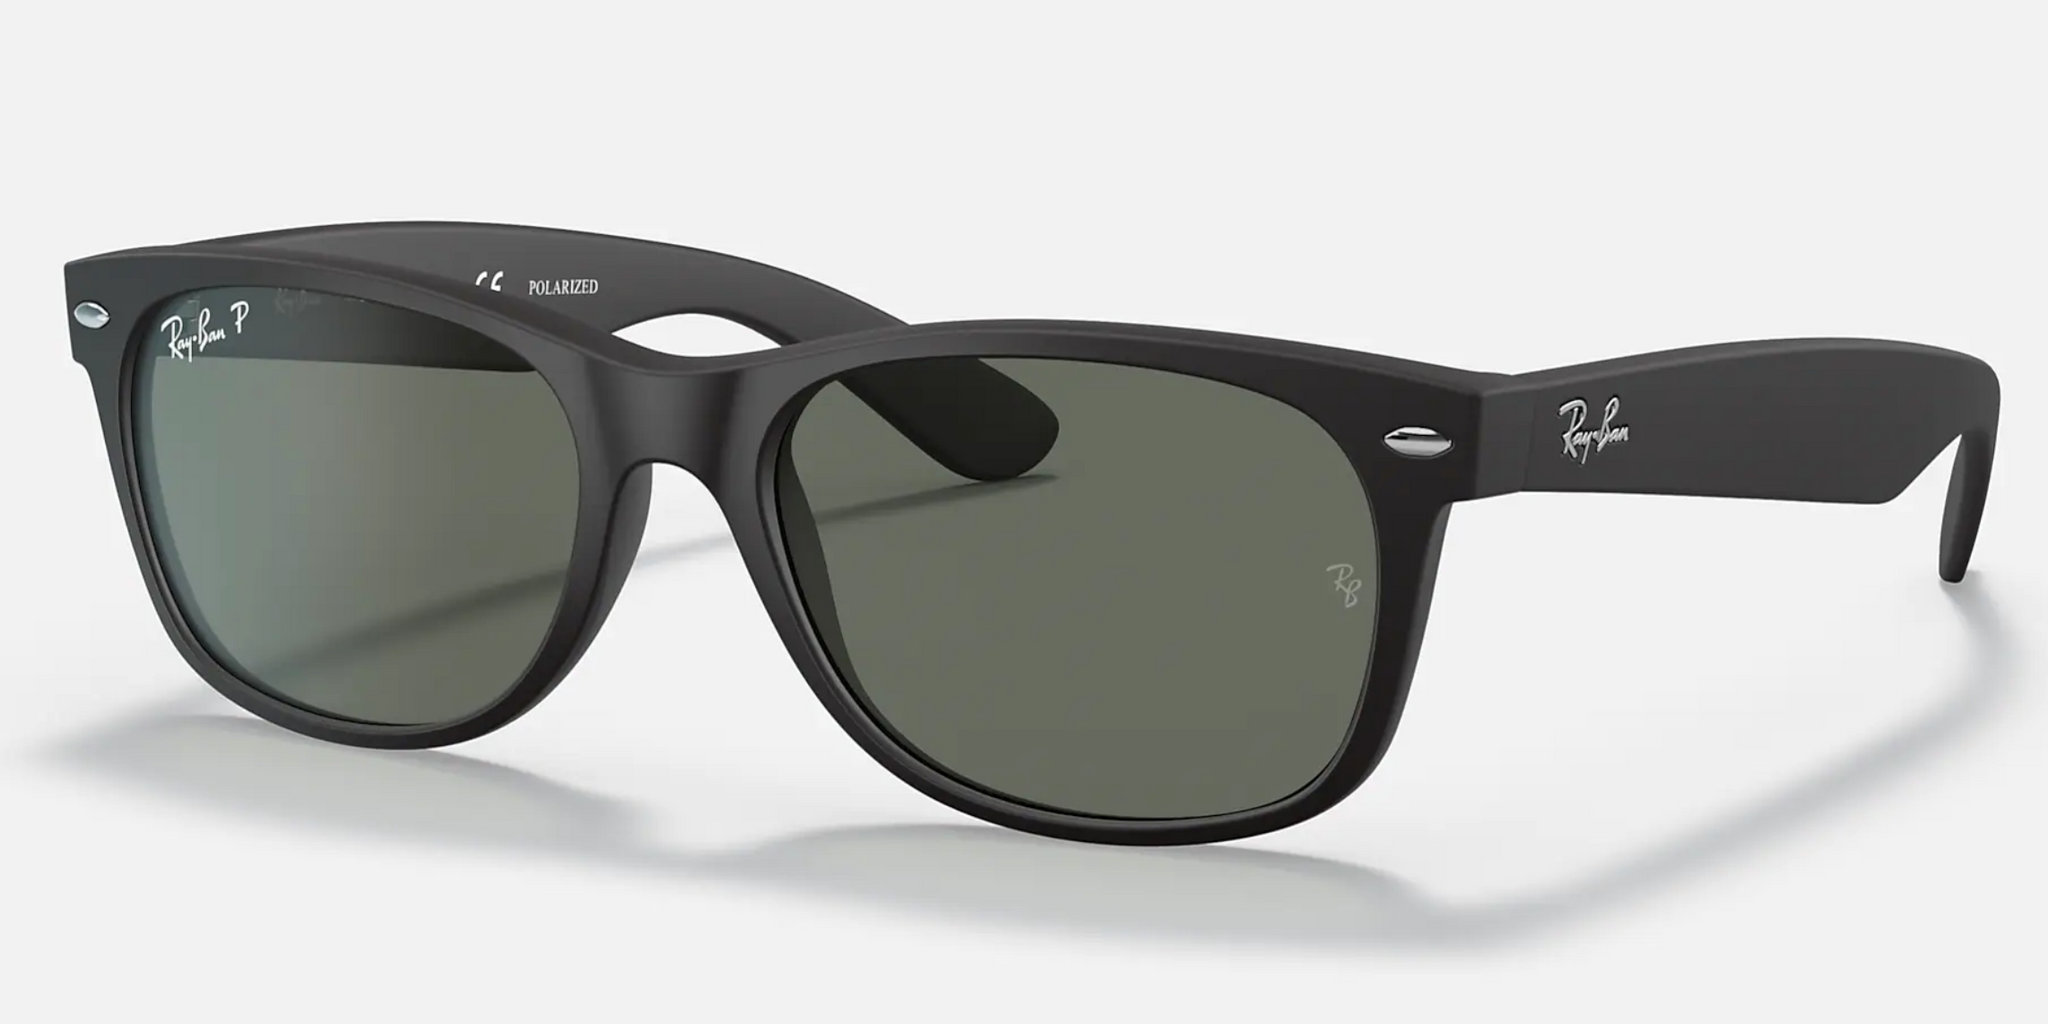 Ray-Ban New Wayfarer Black Sunglasses RB2132 - Flight Sunglasses